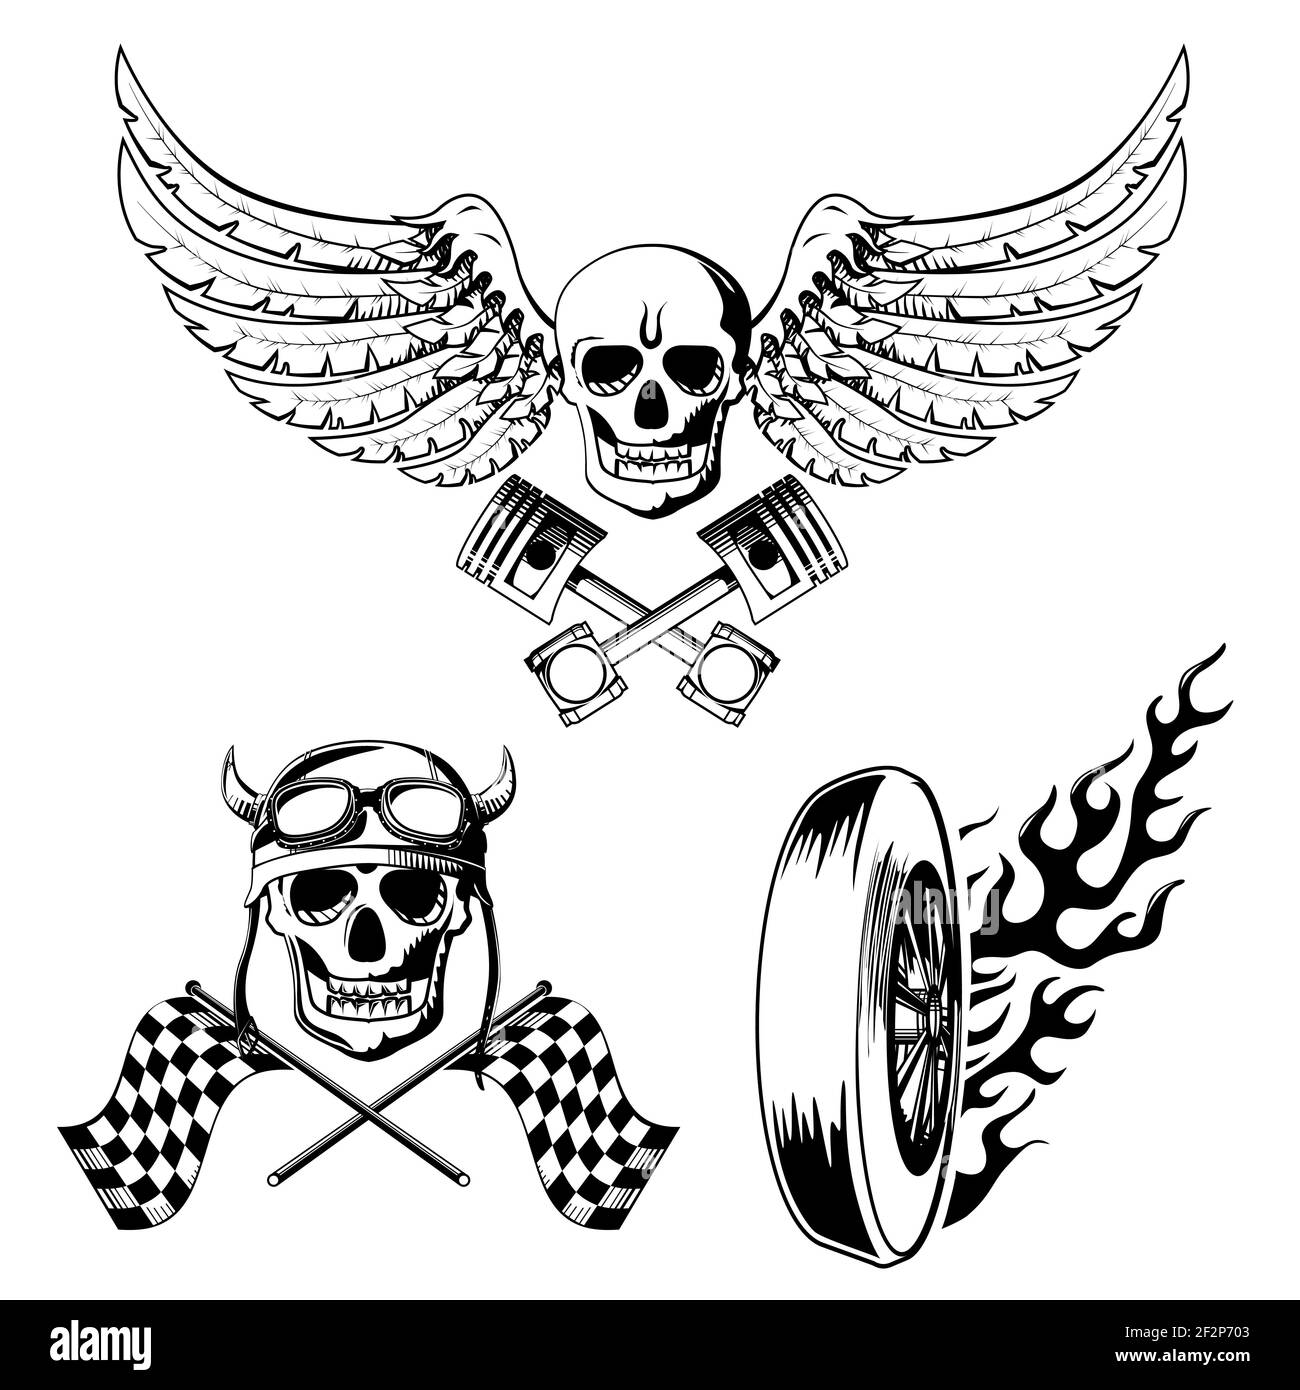 Motorrad Fahrrad Aufkleber mit Totenkopf Flammen und Flagge  Vektor-illustration Stock-Vektorgrafik - Alamy